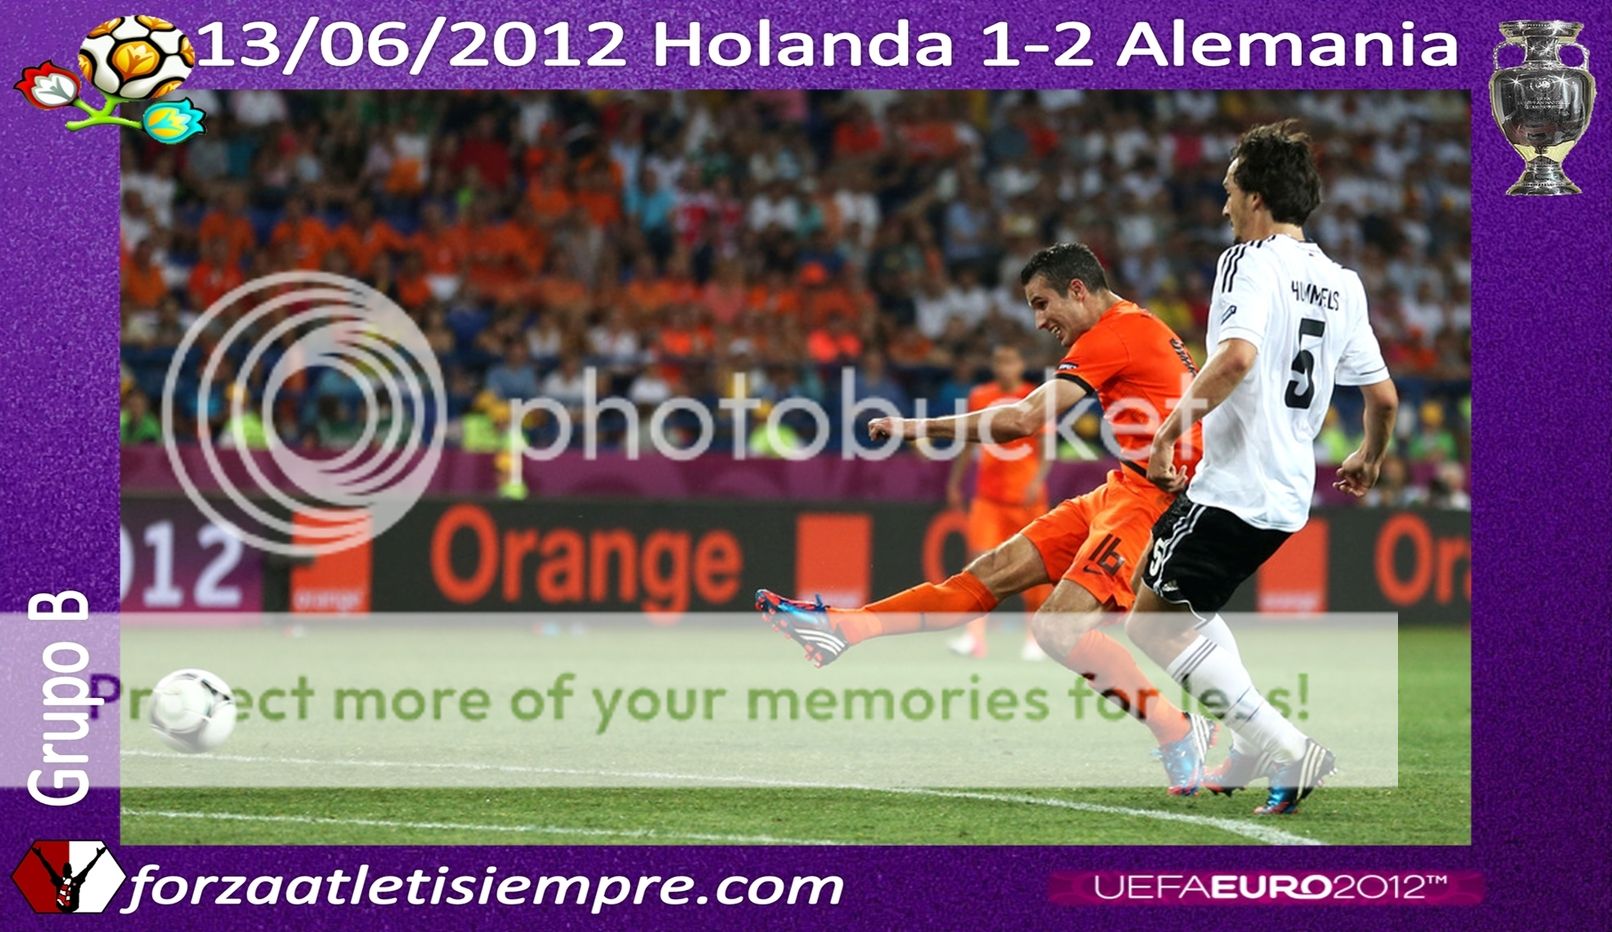 HOLANDA 1- ALEMANIA 2 - Holanda se tambalea 032Copiar-11